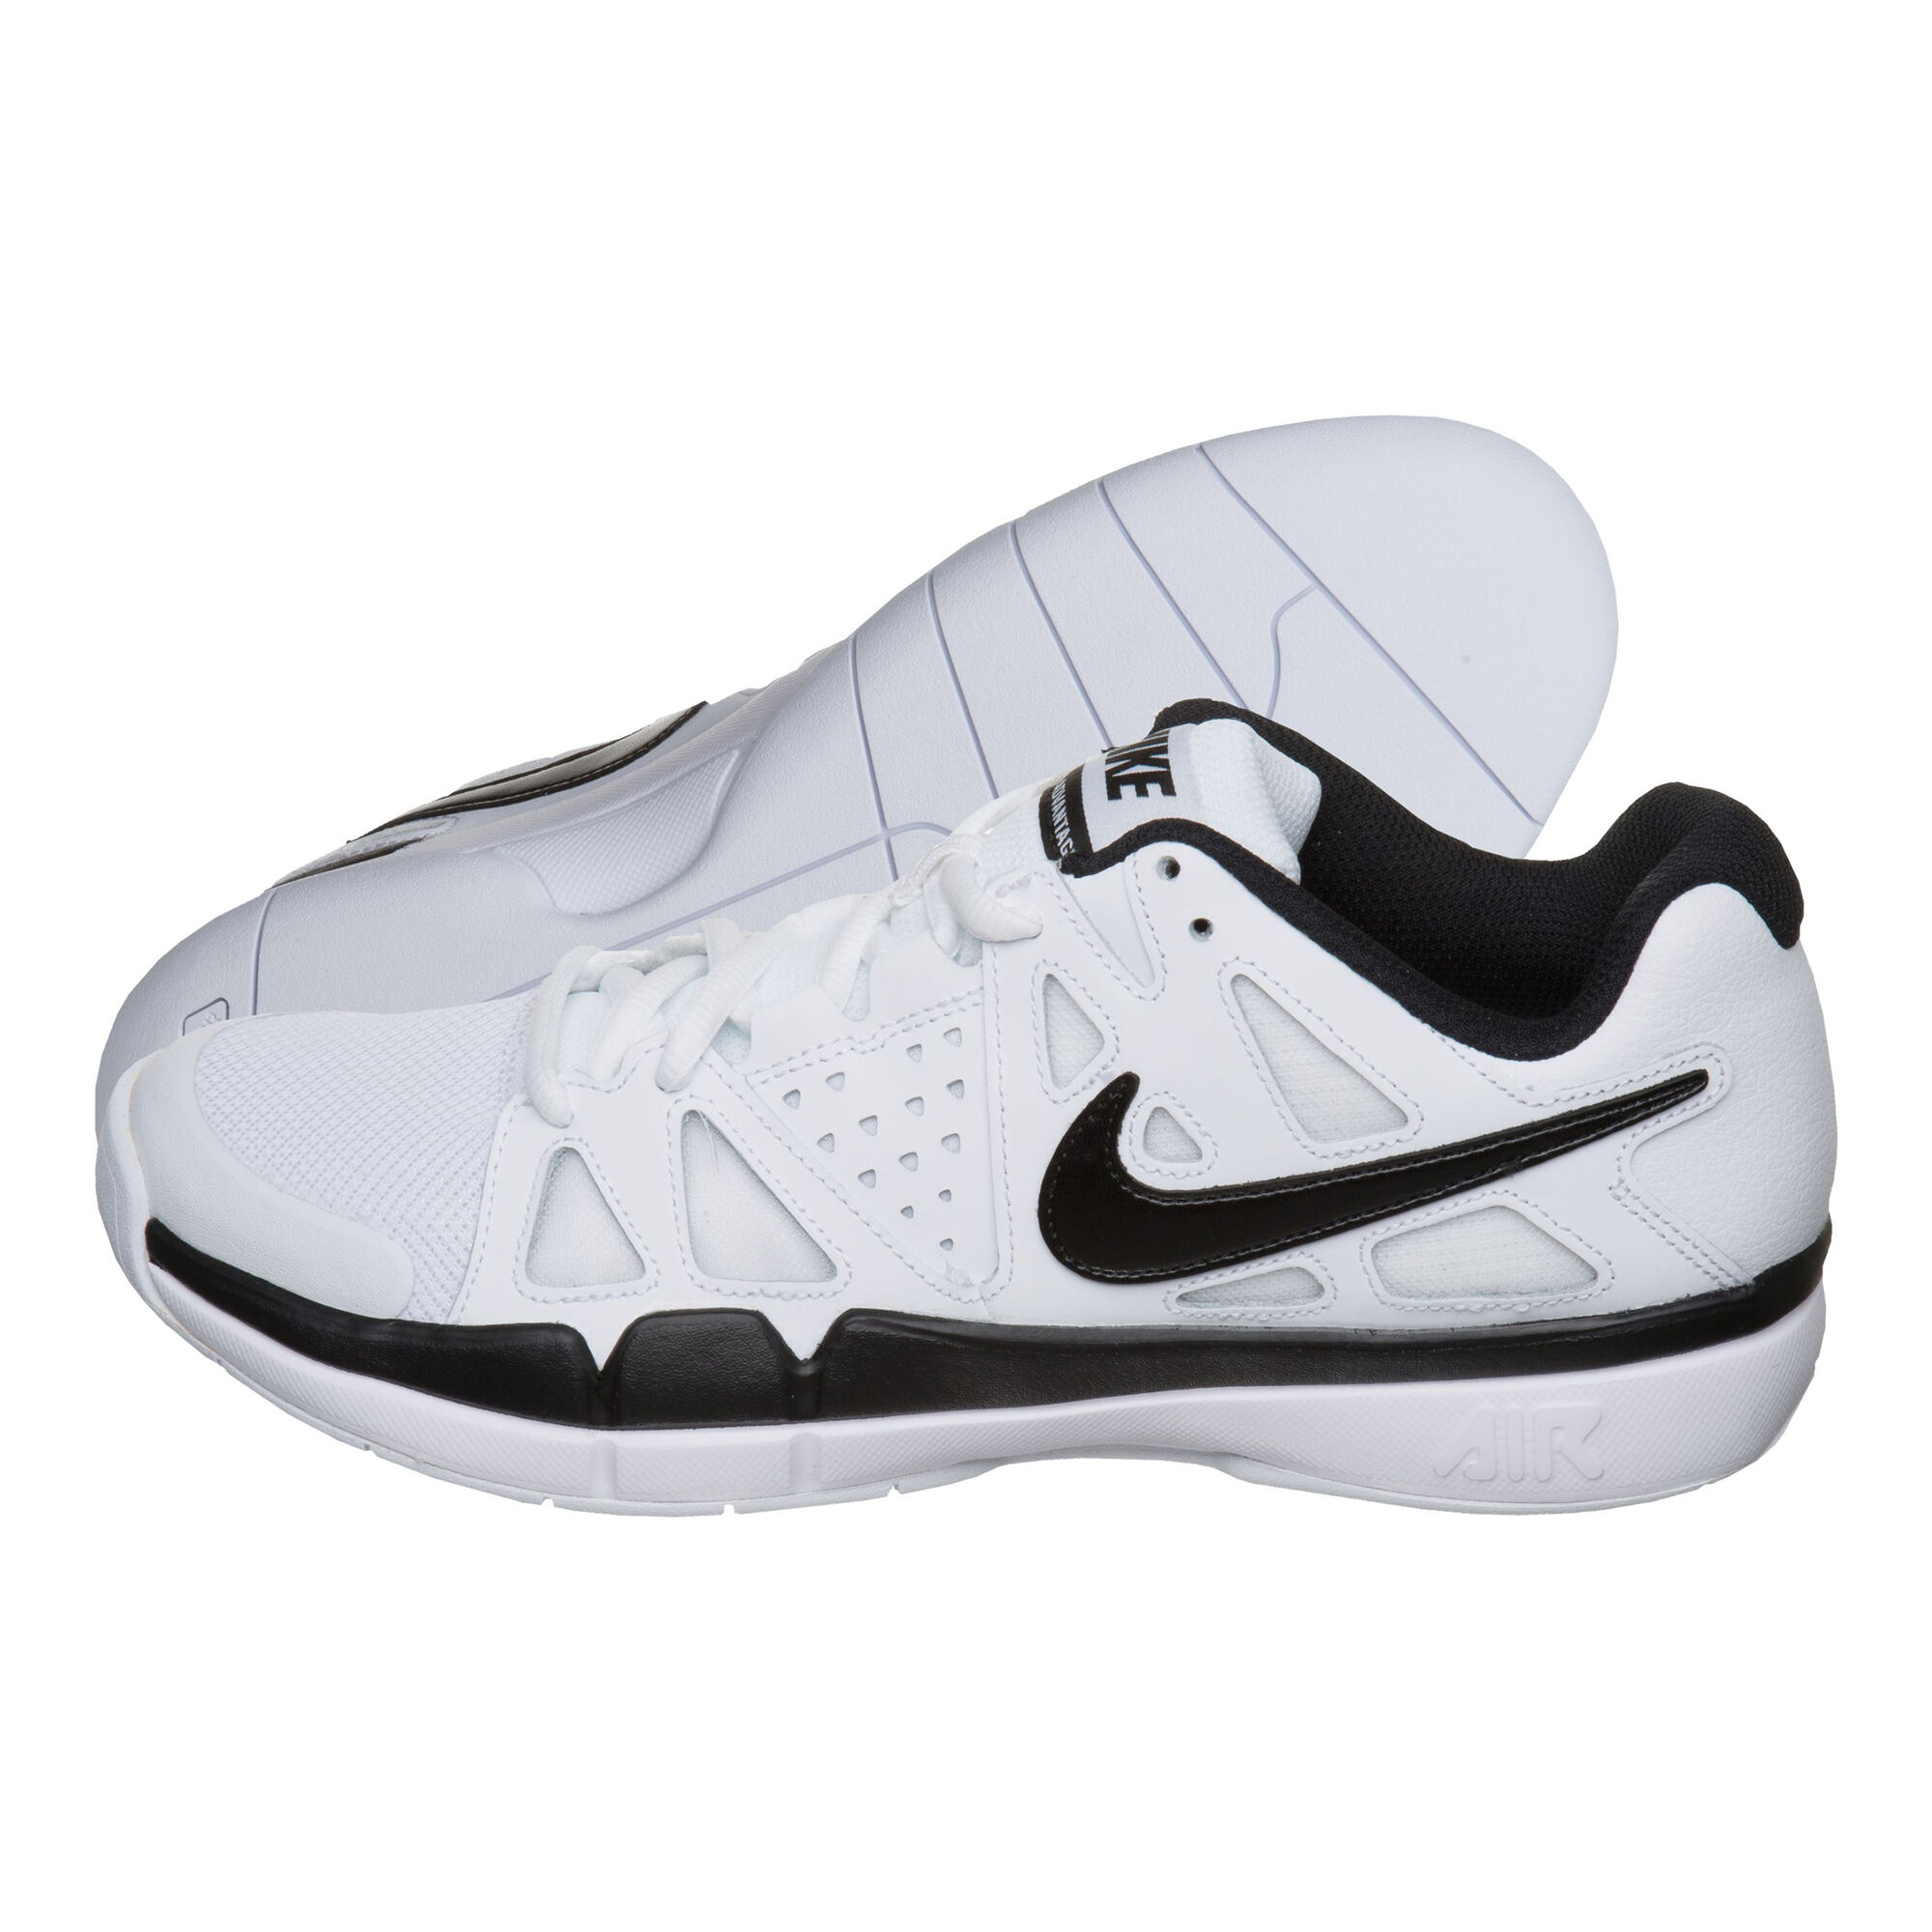 spons Verdienen flexibel buy Nike Air Vapor Advantage Indoor Carpet Shoe Men - White, Black online |  Tennis-Point